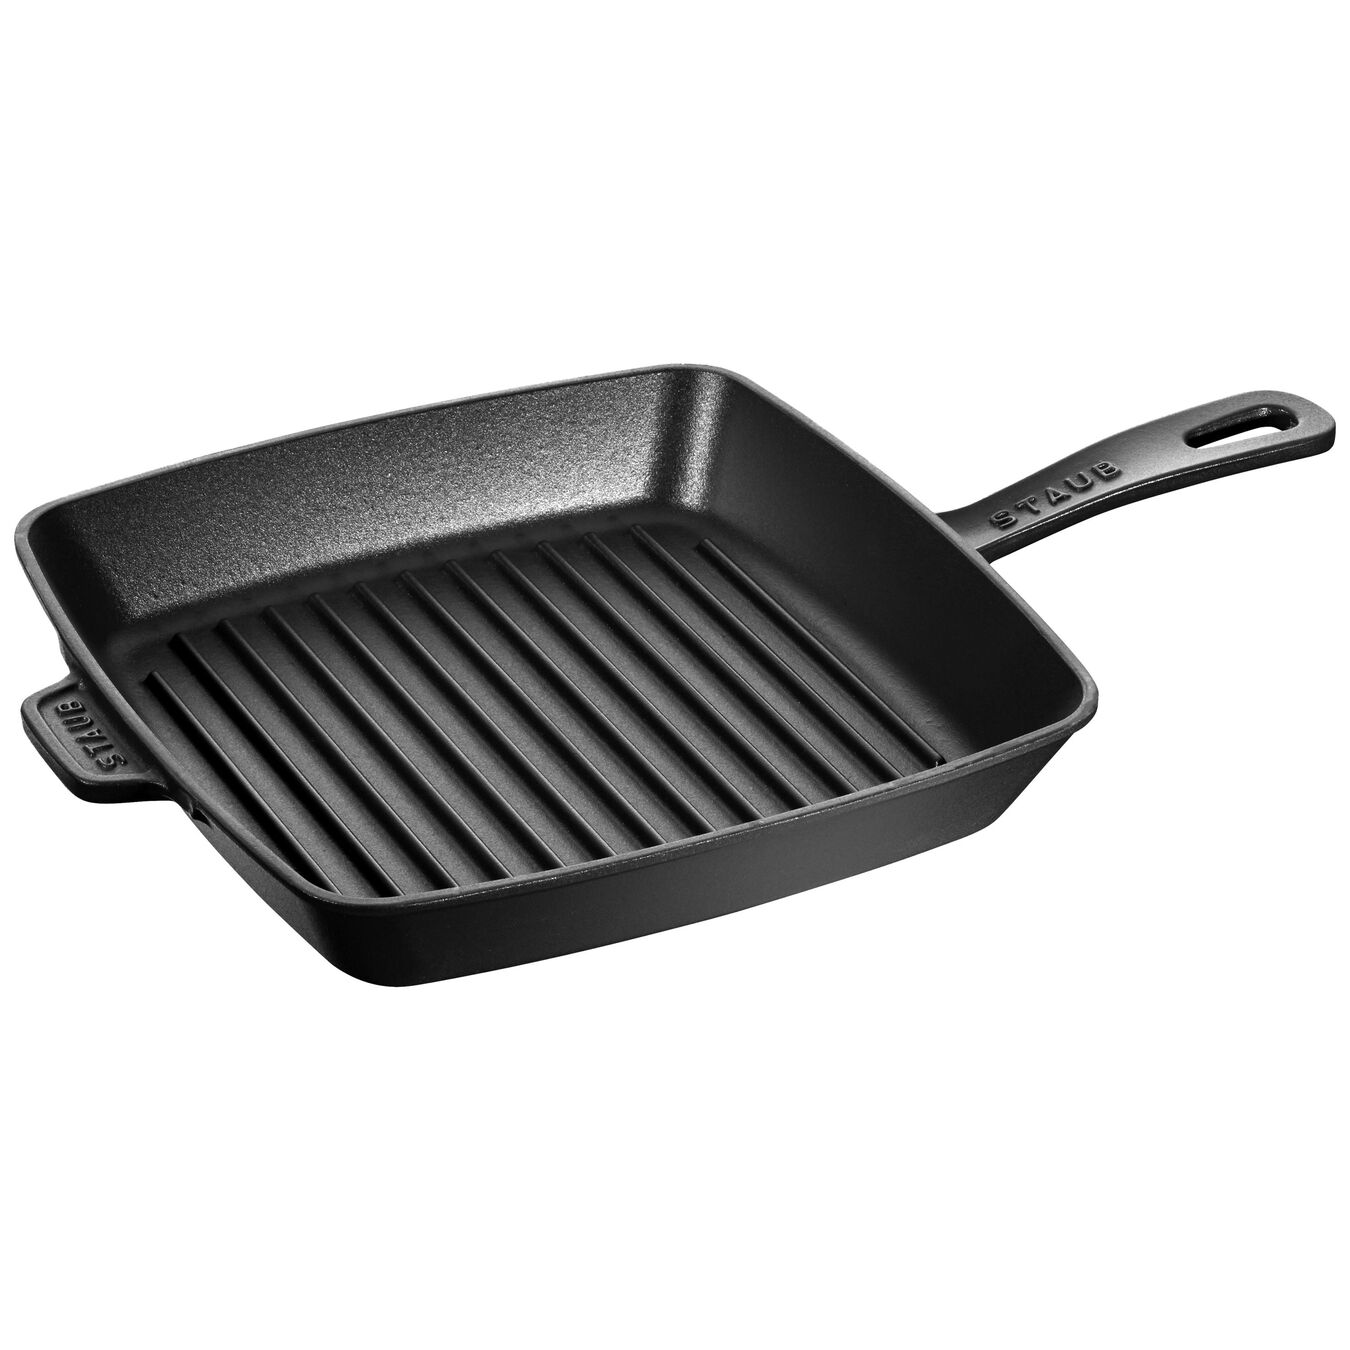 26 cm cast iron square American grill, black,,large 1